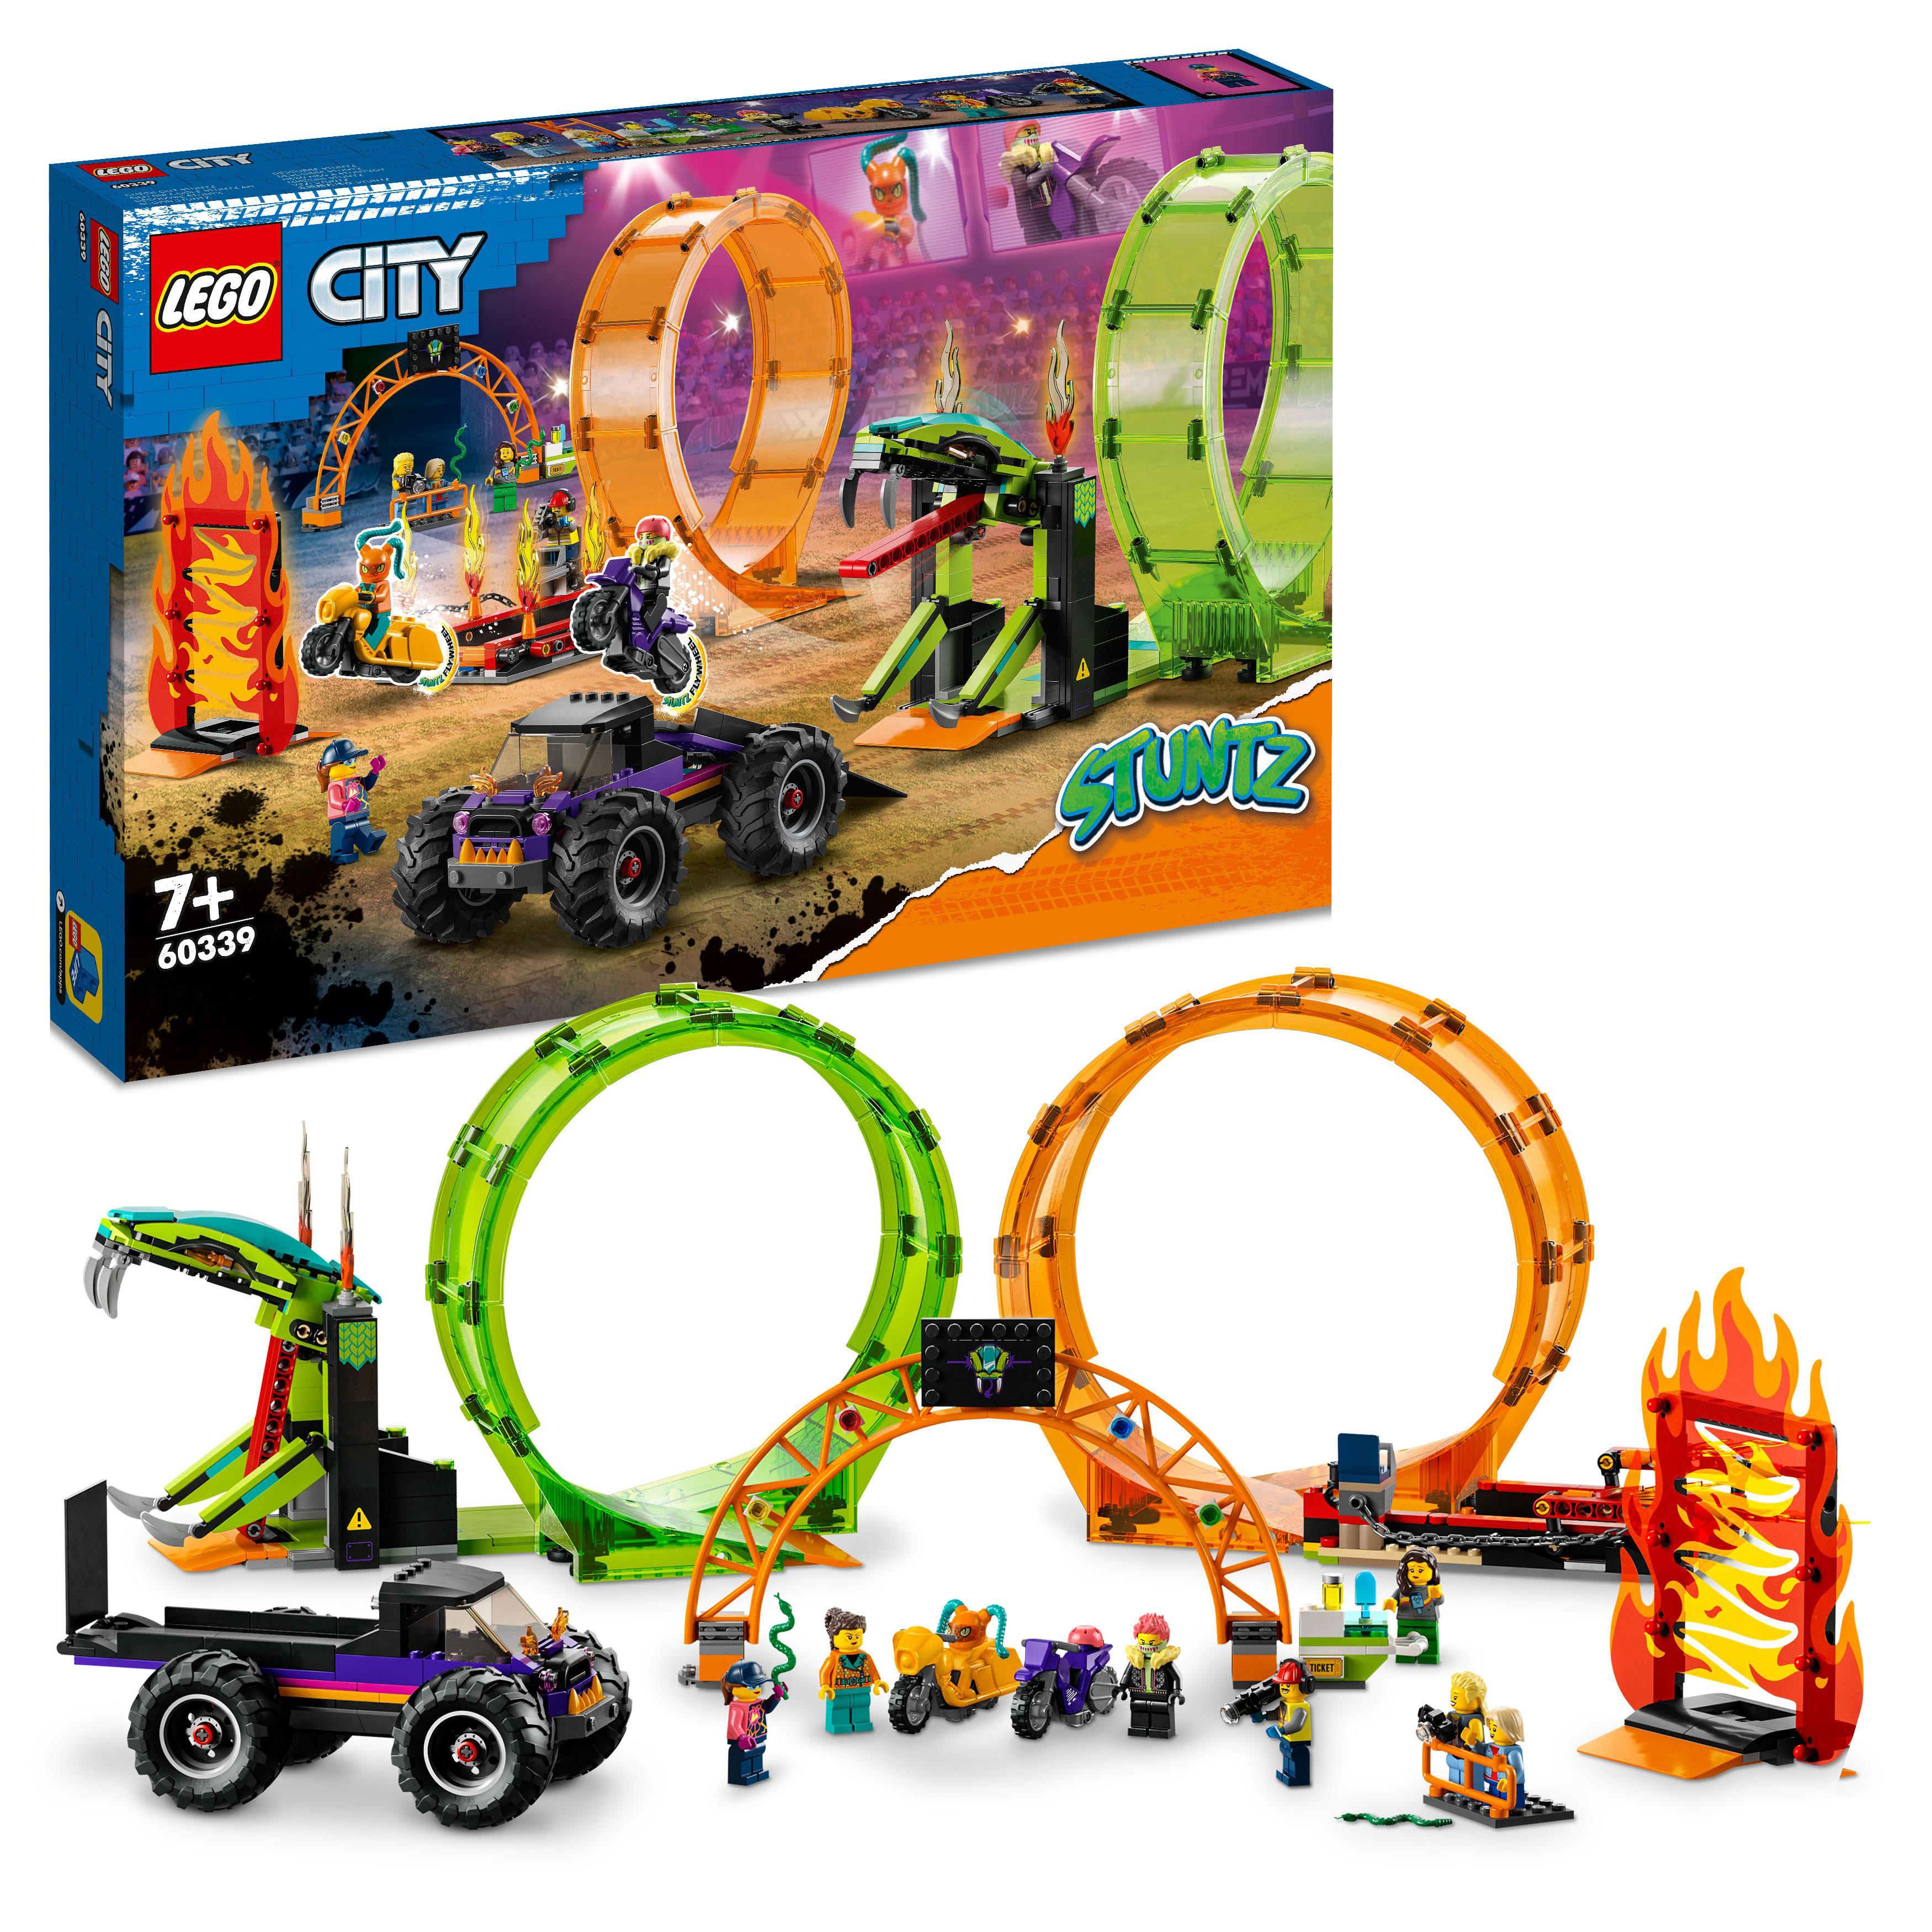 Mehrfarbig Bausatz, Stuntshow-Doppellooping 60339 LEGO Stuntz City